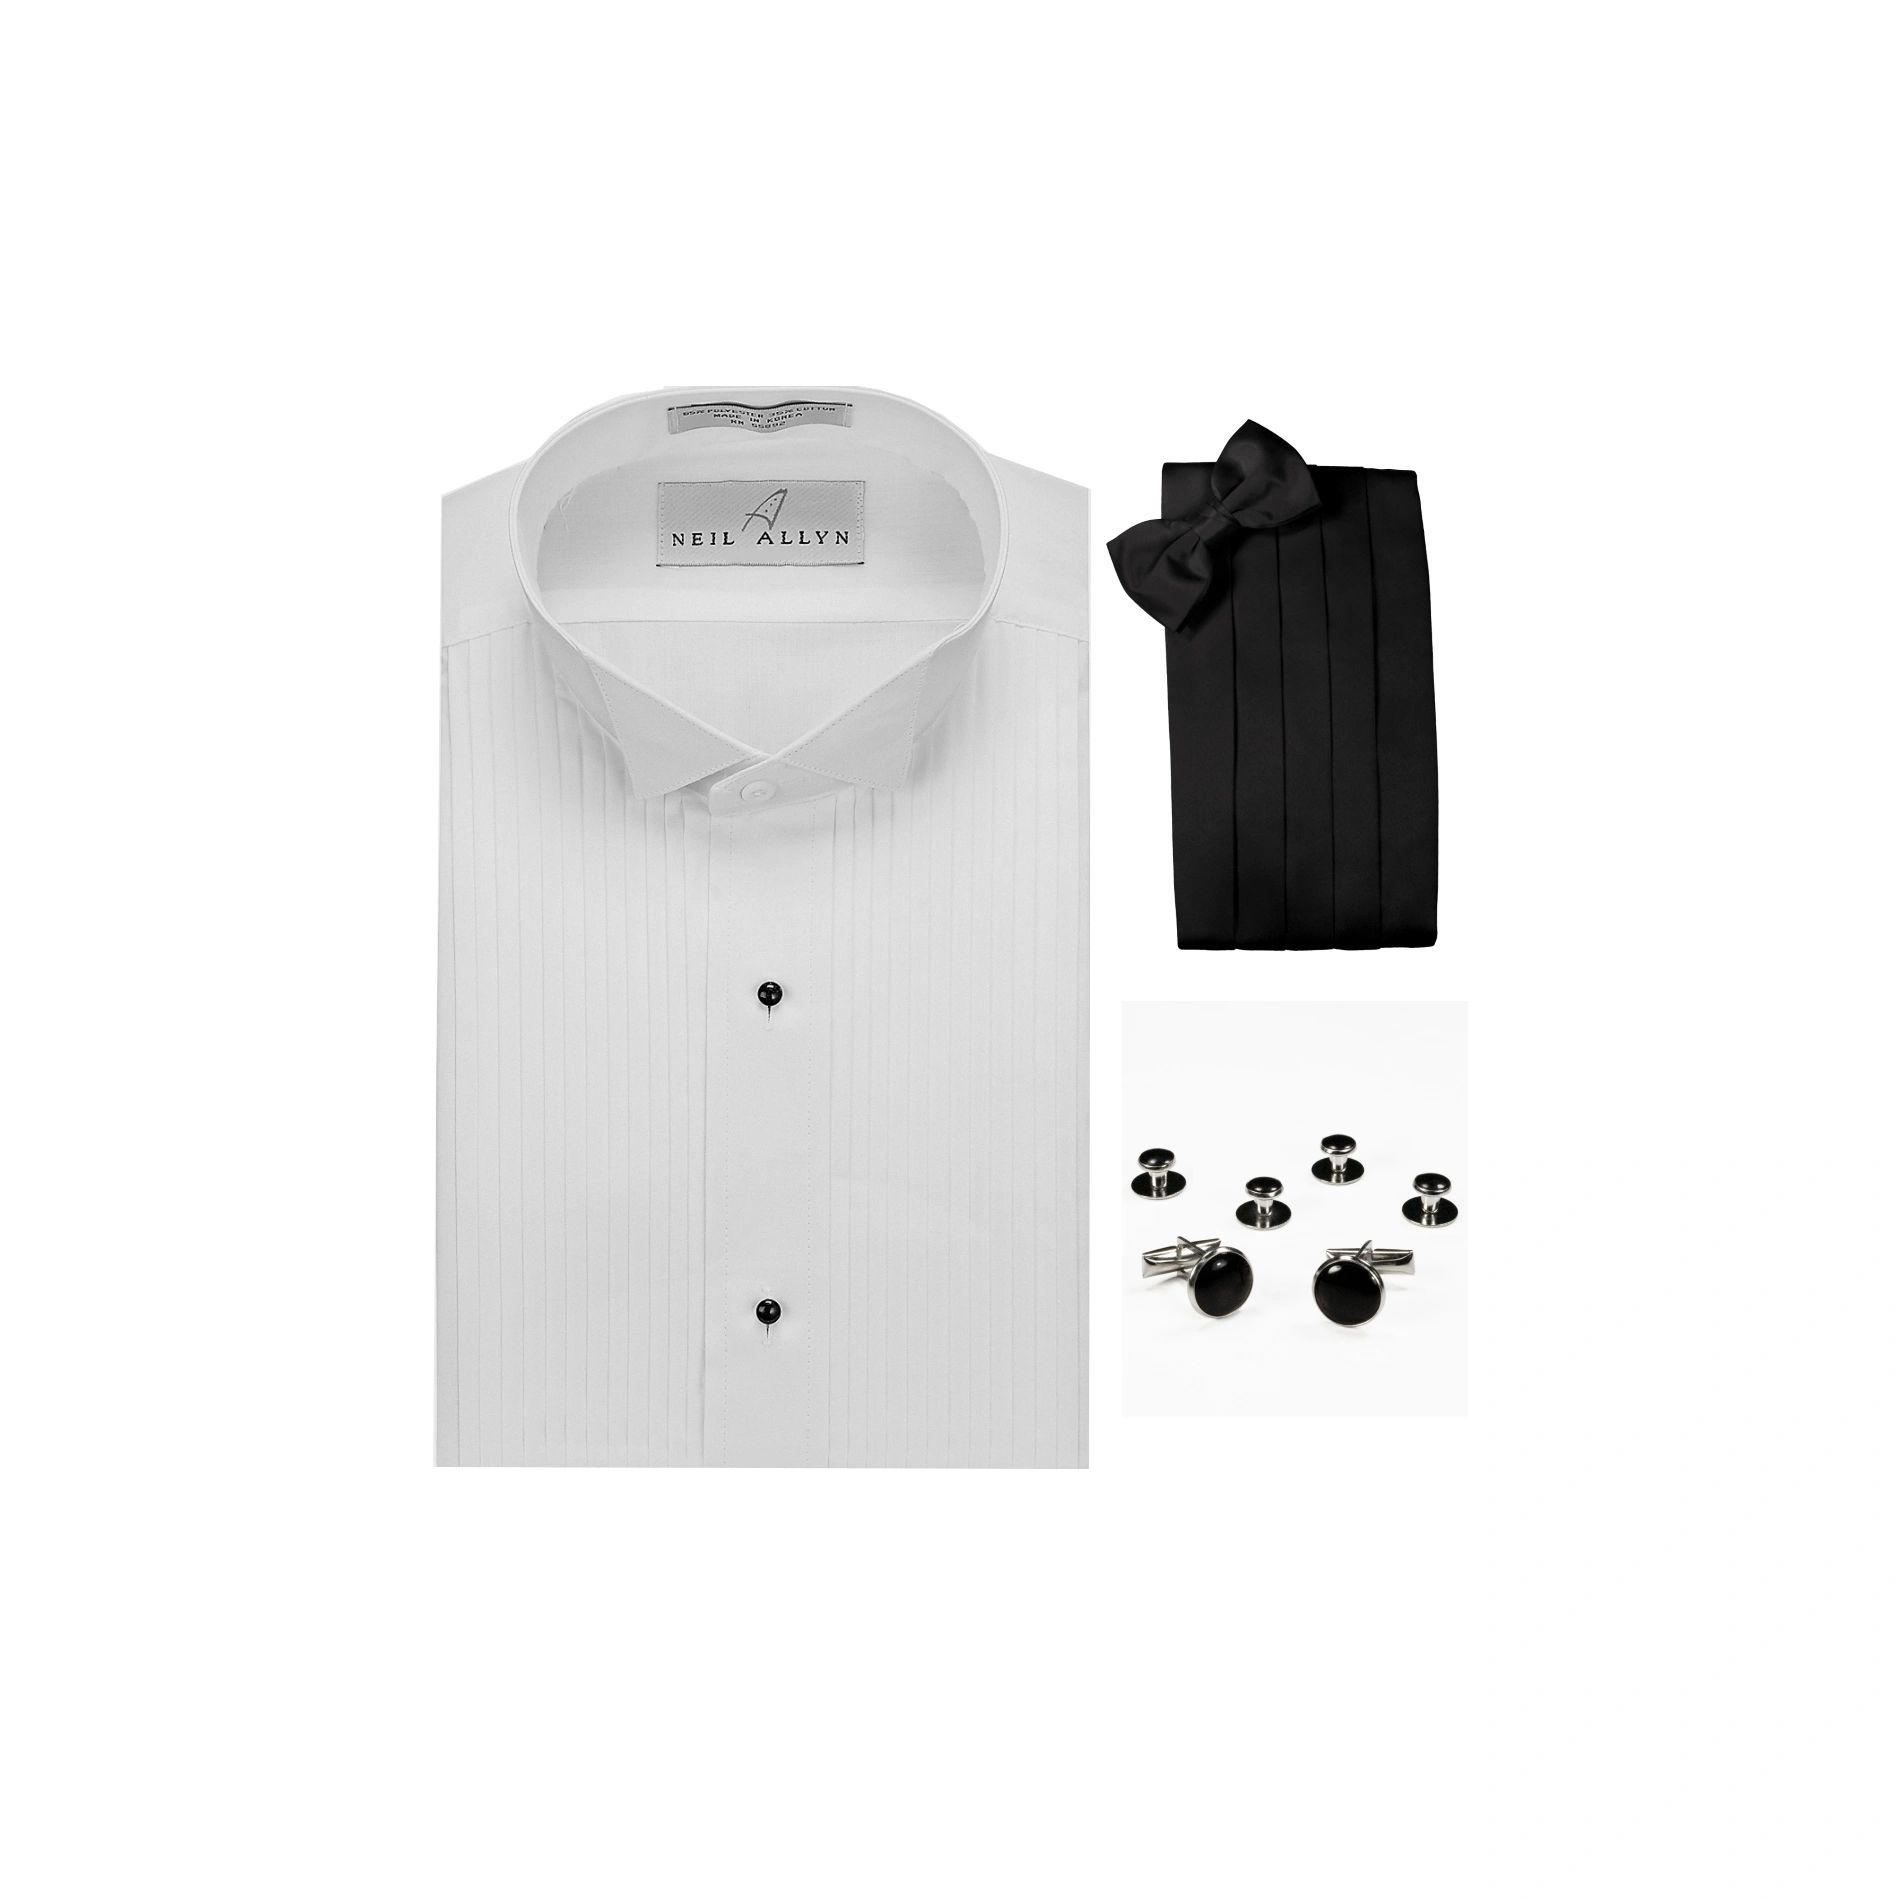 Neil Allyn FITTED Wing Collar 1/4" Pleats Formal Tuxedo Shirt, Cummerbund, Bow-Tie, Cuff Links & Studs